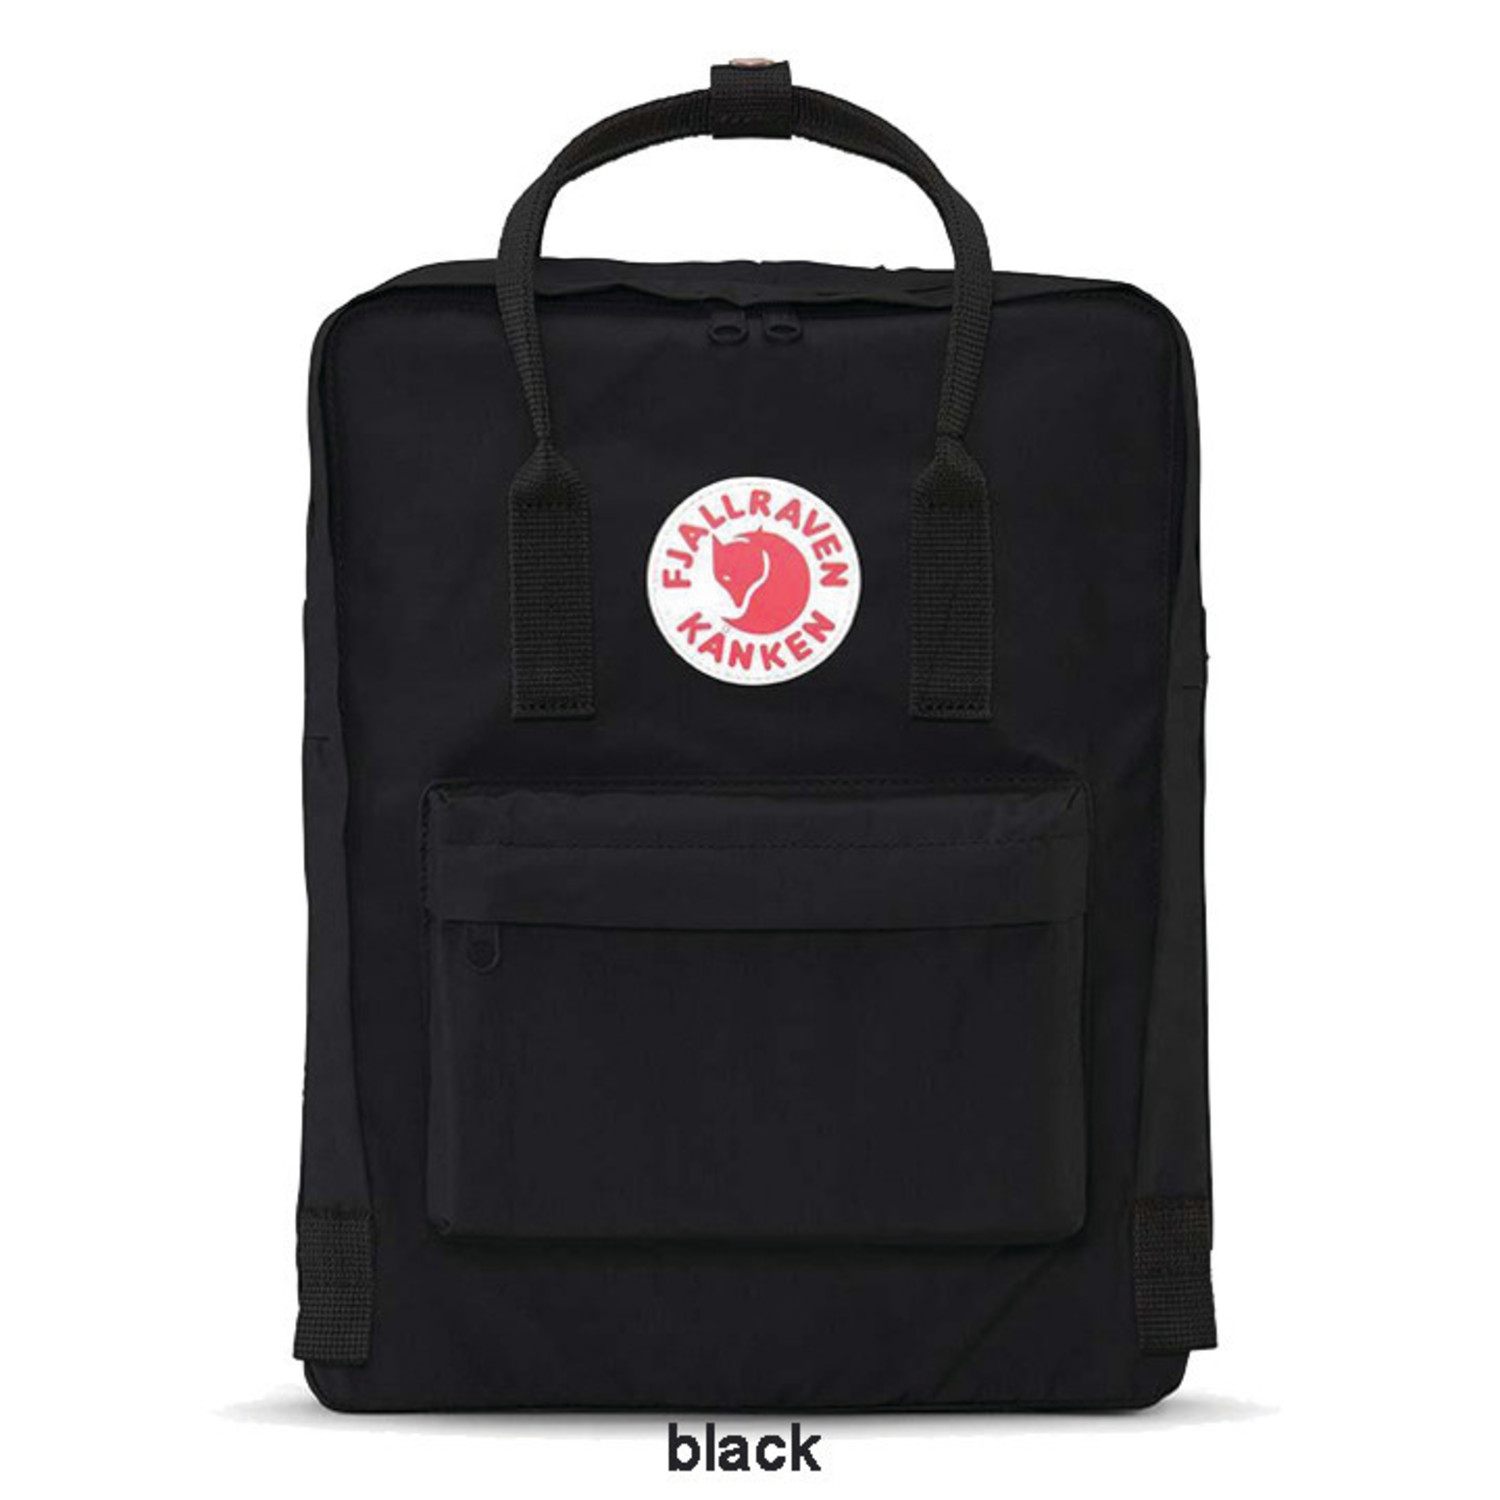 Praktisch Serie van opwinding Kanken Backpack - Lucky Wang nyc